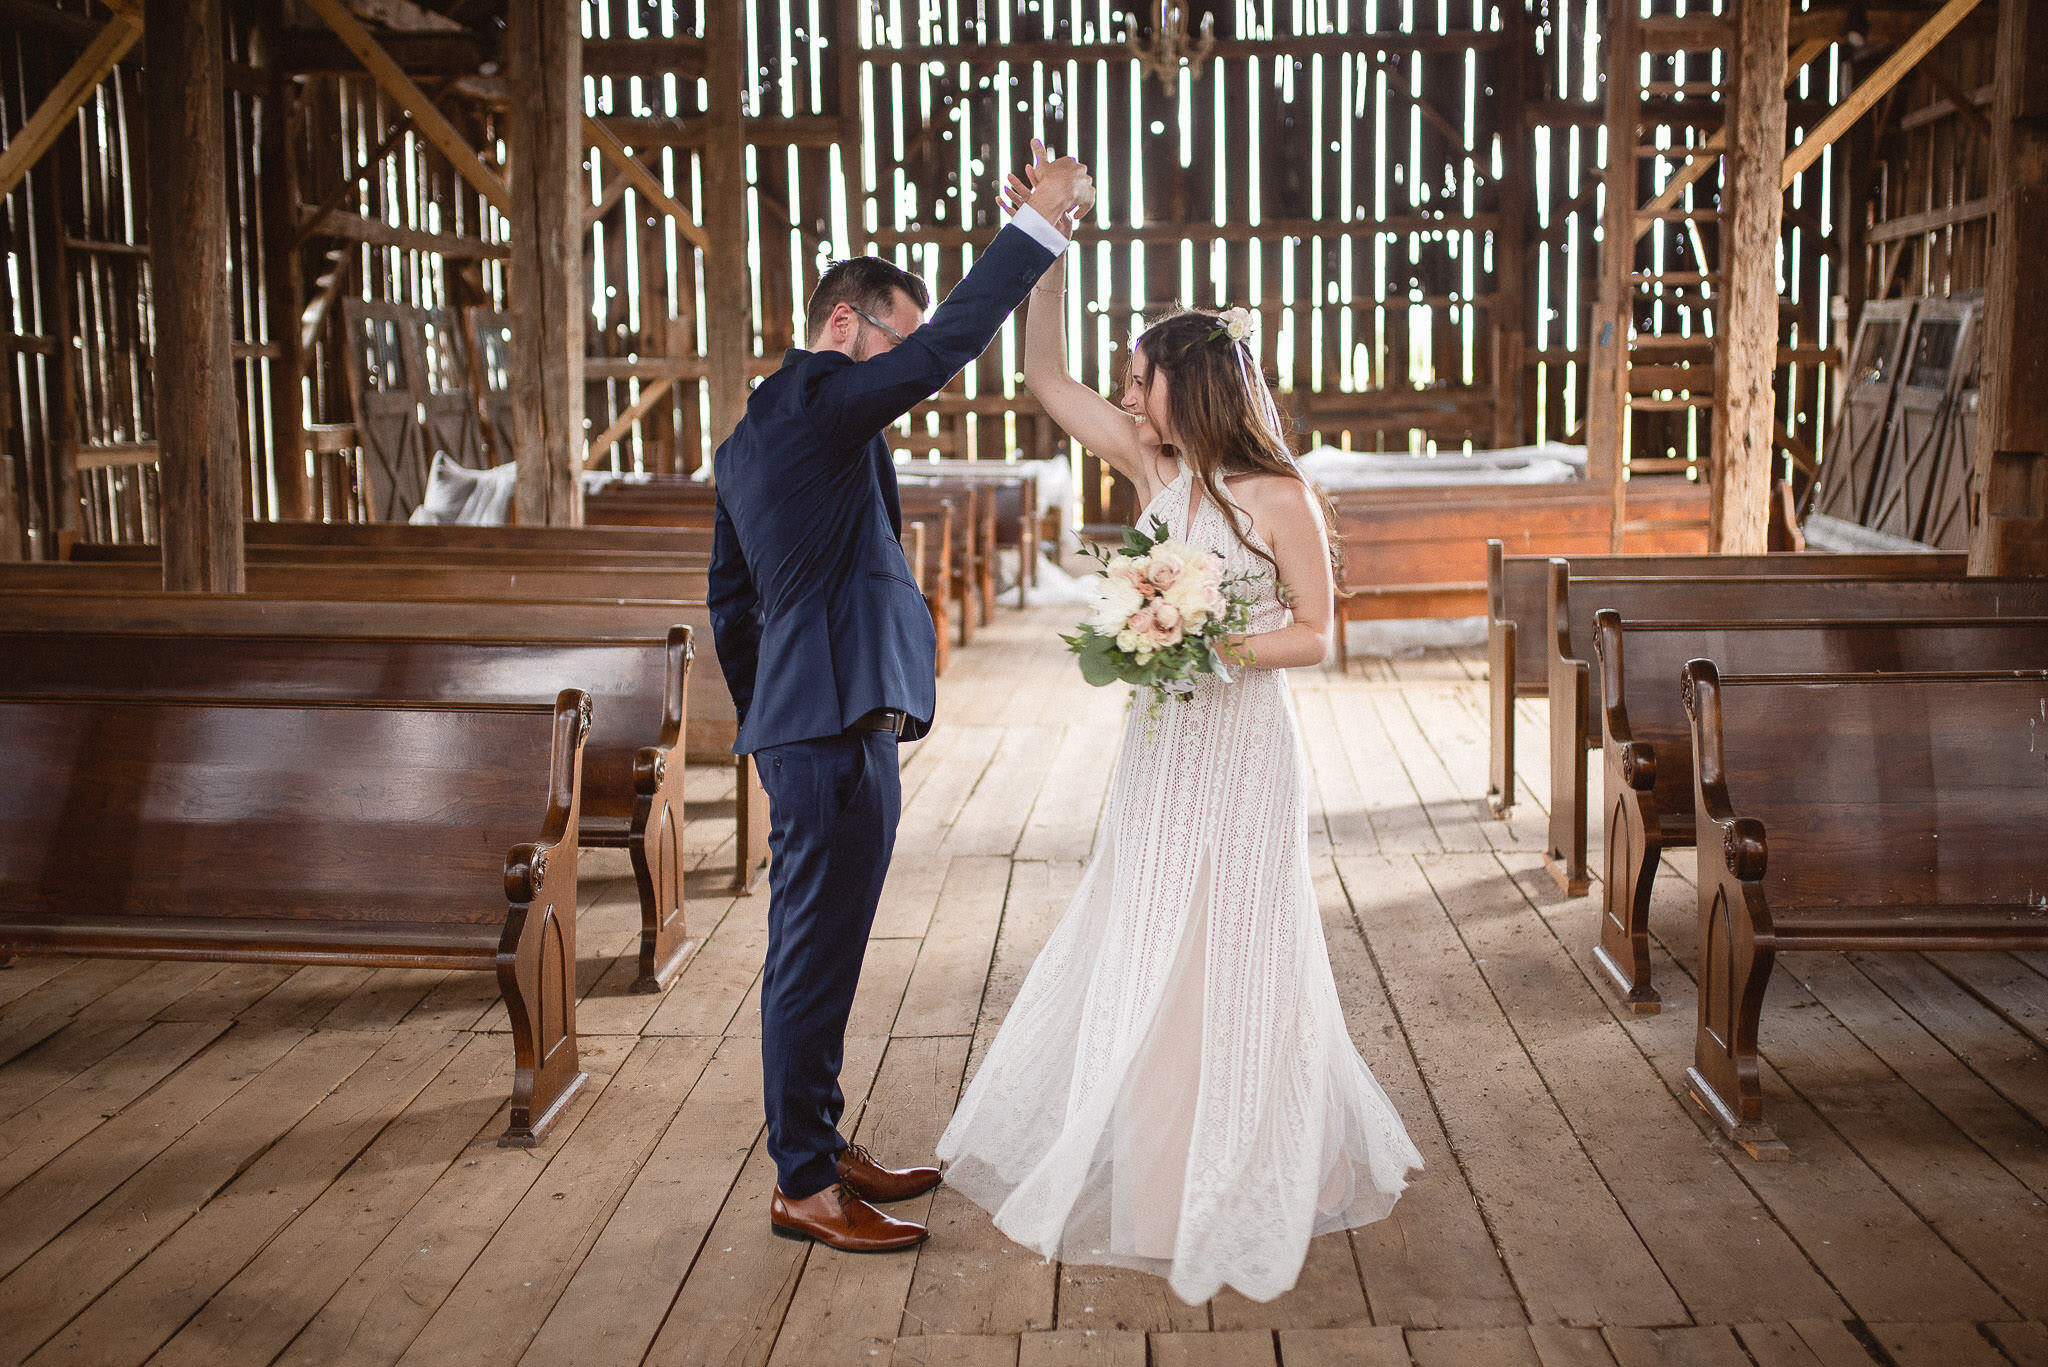 Wedding First Look in Barn | Ontario Wedding Photographer